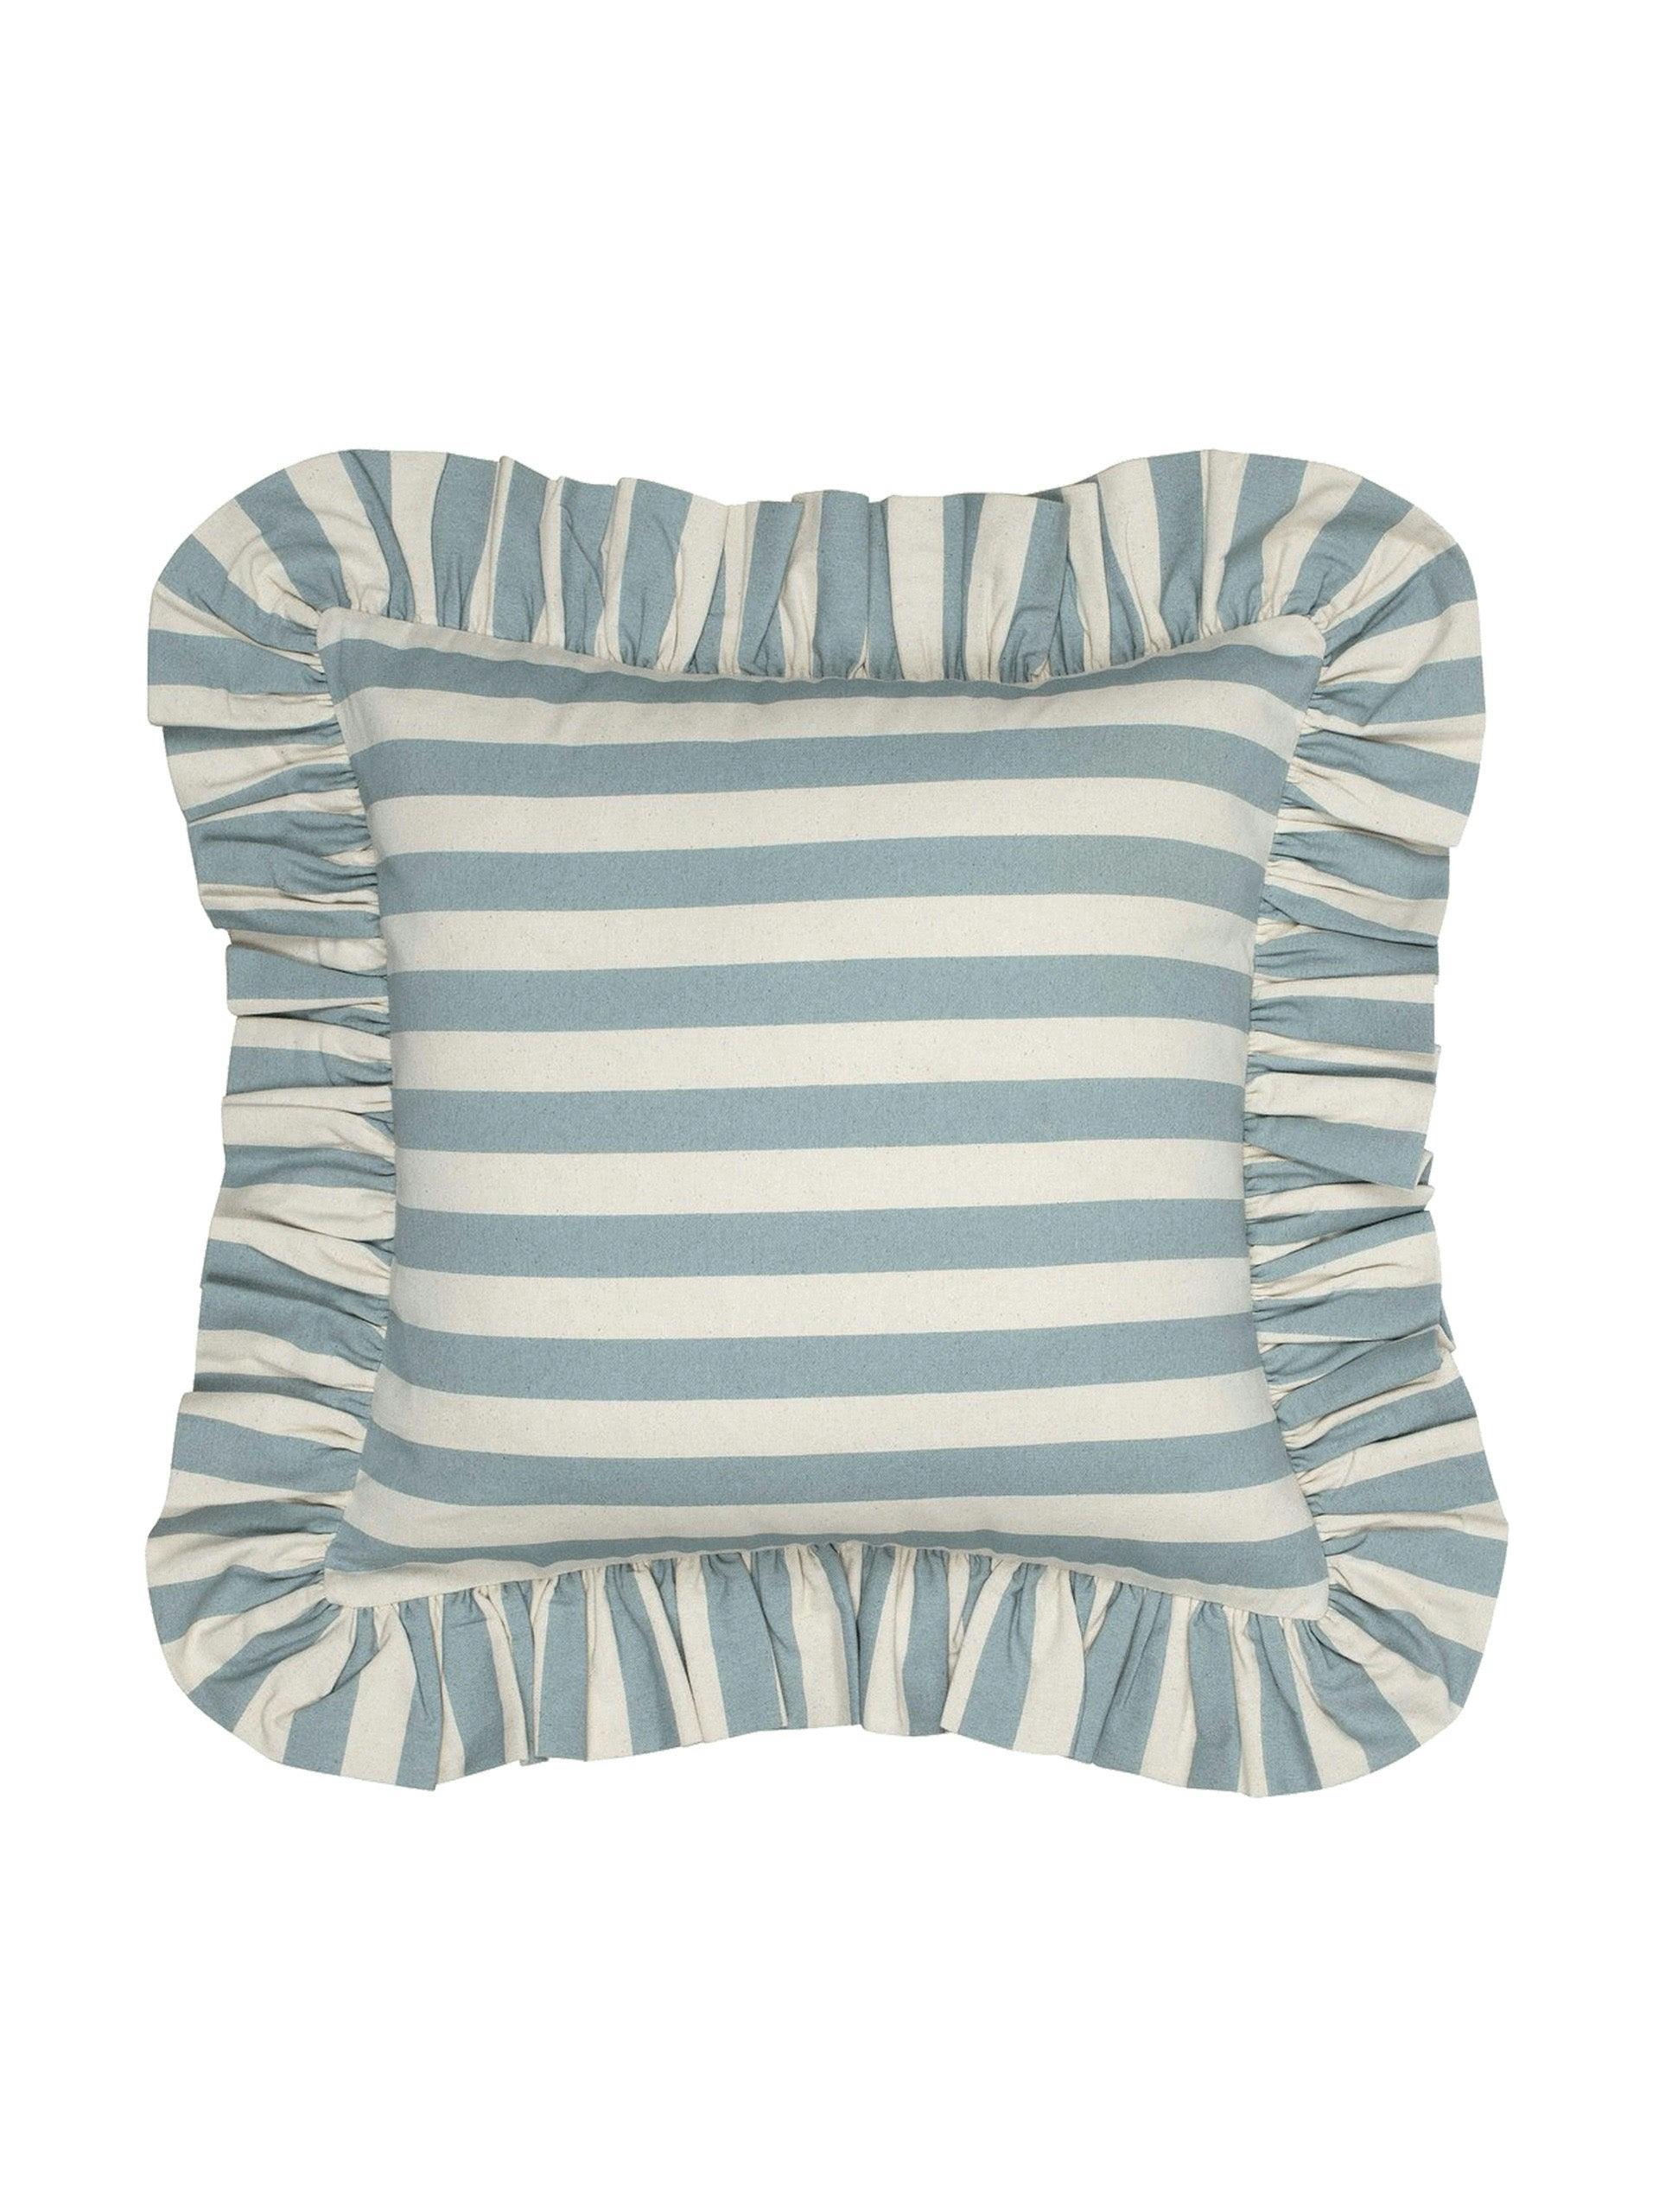 Pale blue Tangier stripe ruffle cushion